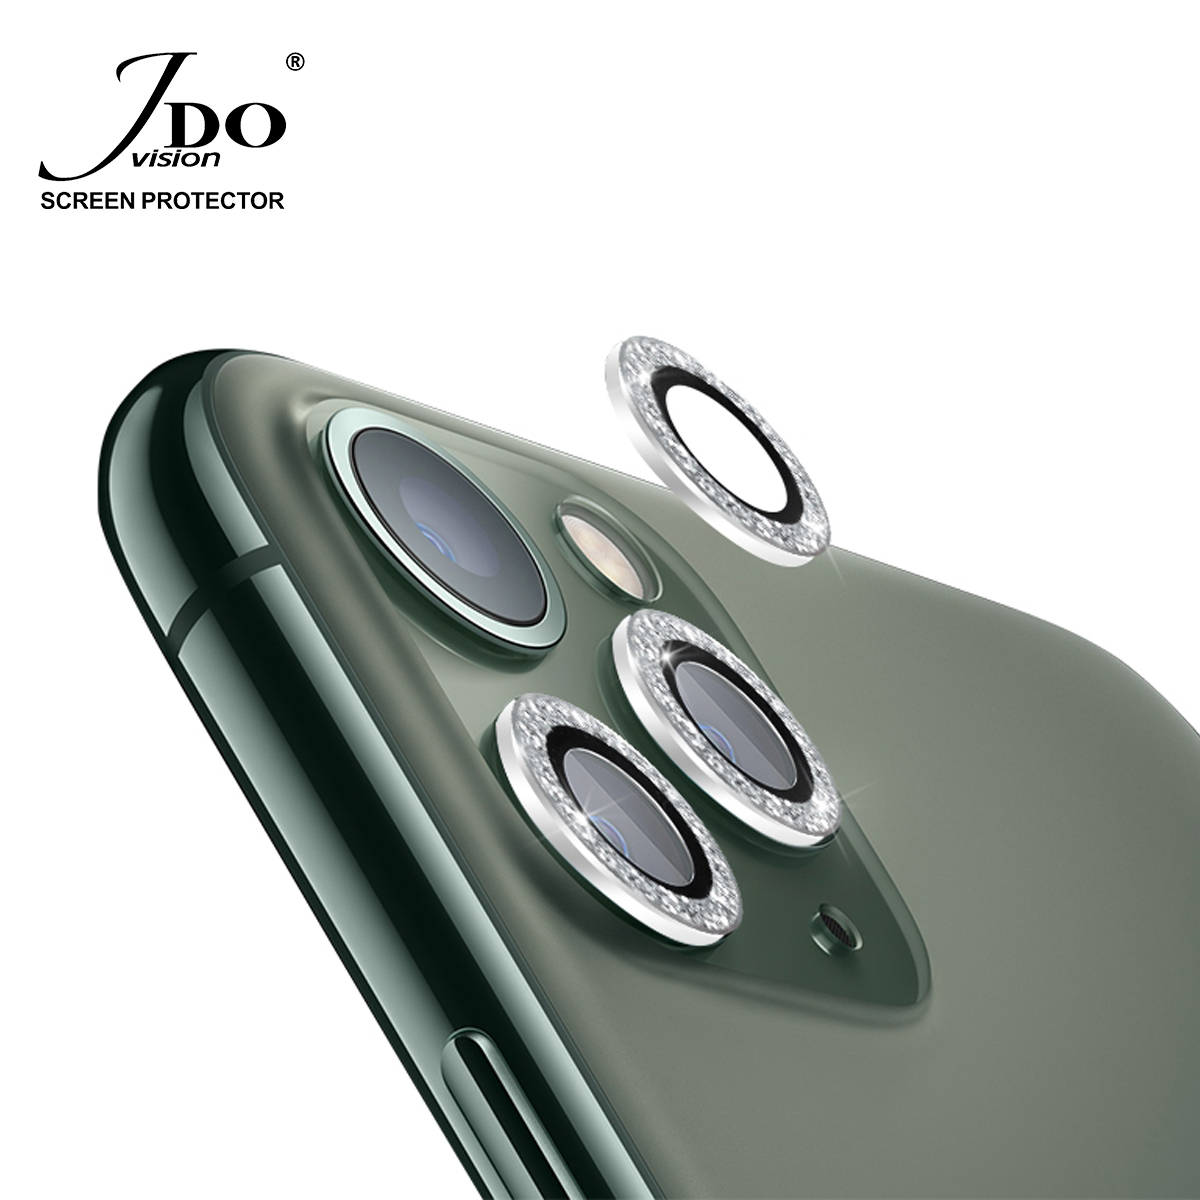 [CAMERA BROKEN DIAMOND] ฟิล์มกระจกกล้องกากเพชร วิบวับๆ iPhone11 Pro 11ProMax i12MiNi/i12 pro max Jdo Vision